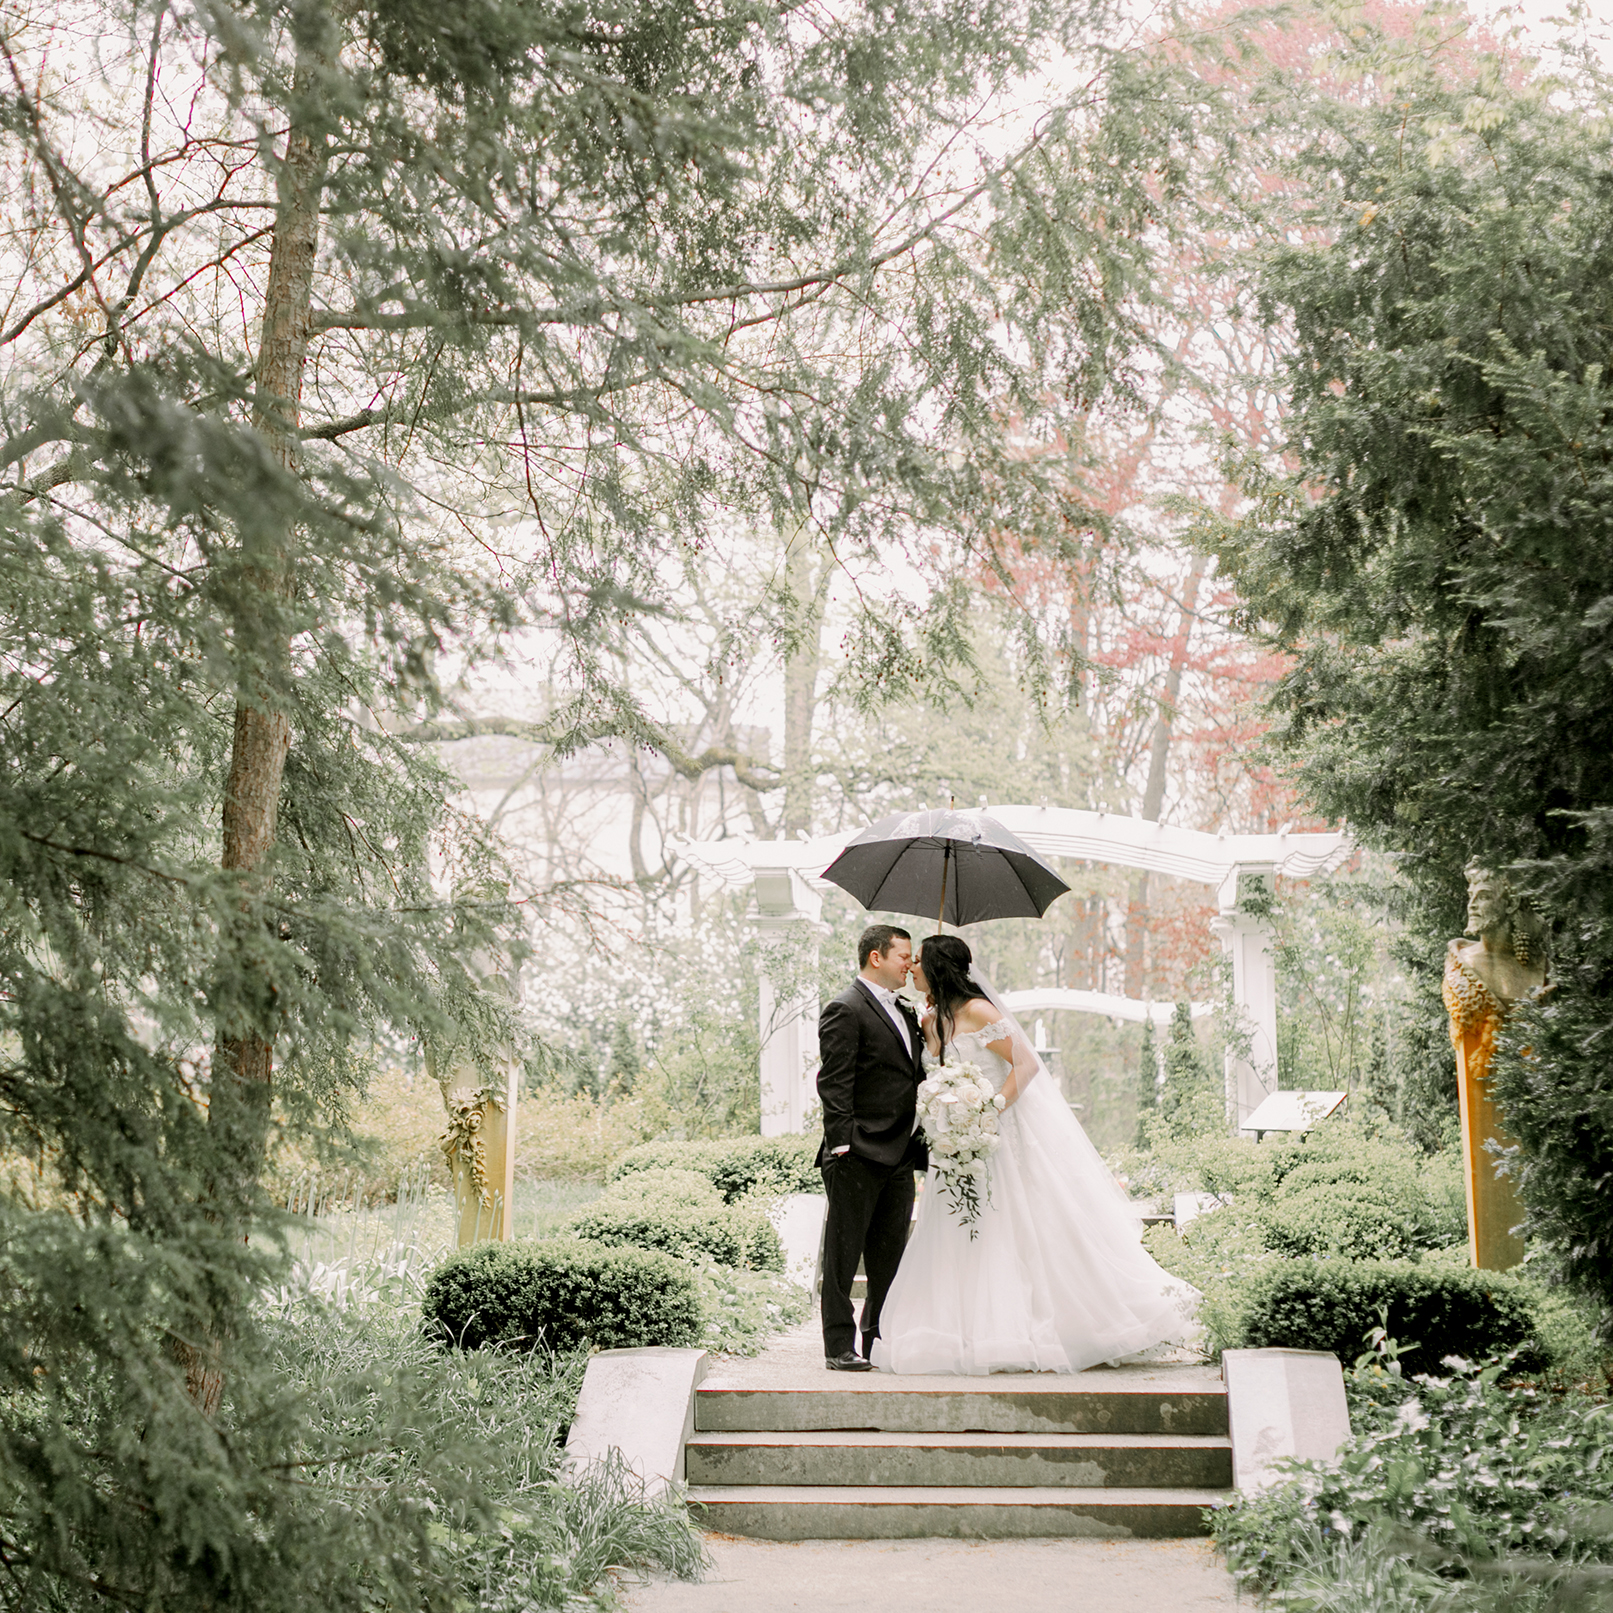 Brittany + John Paul | Wedding Day